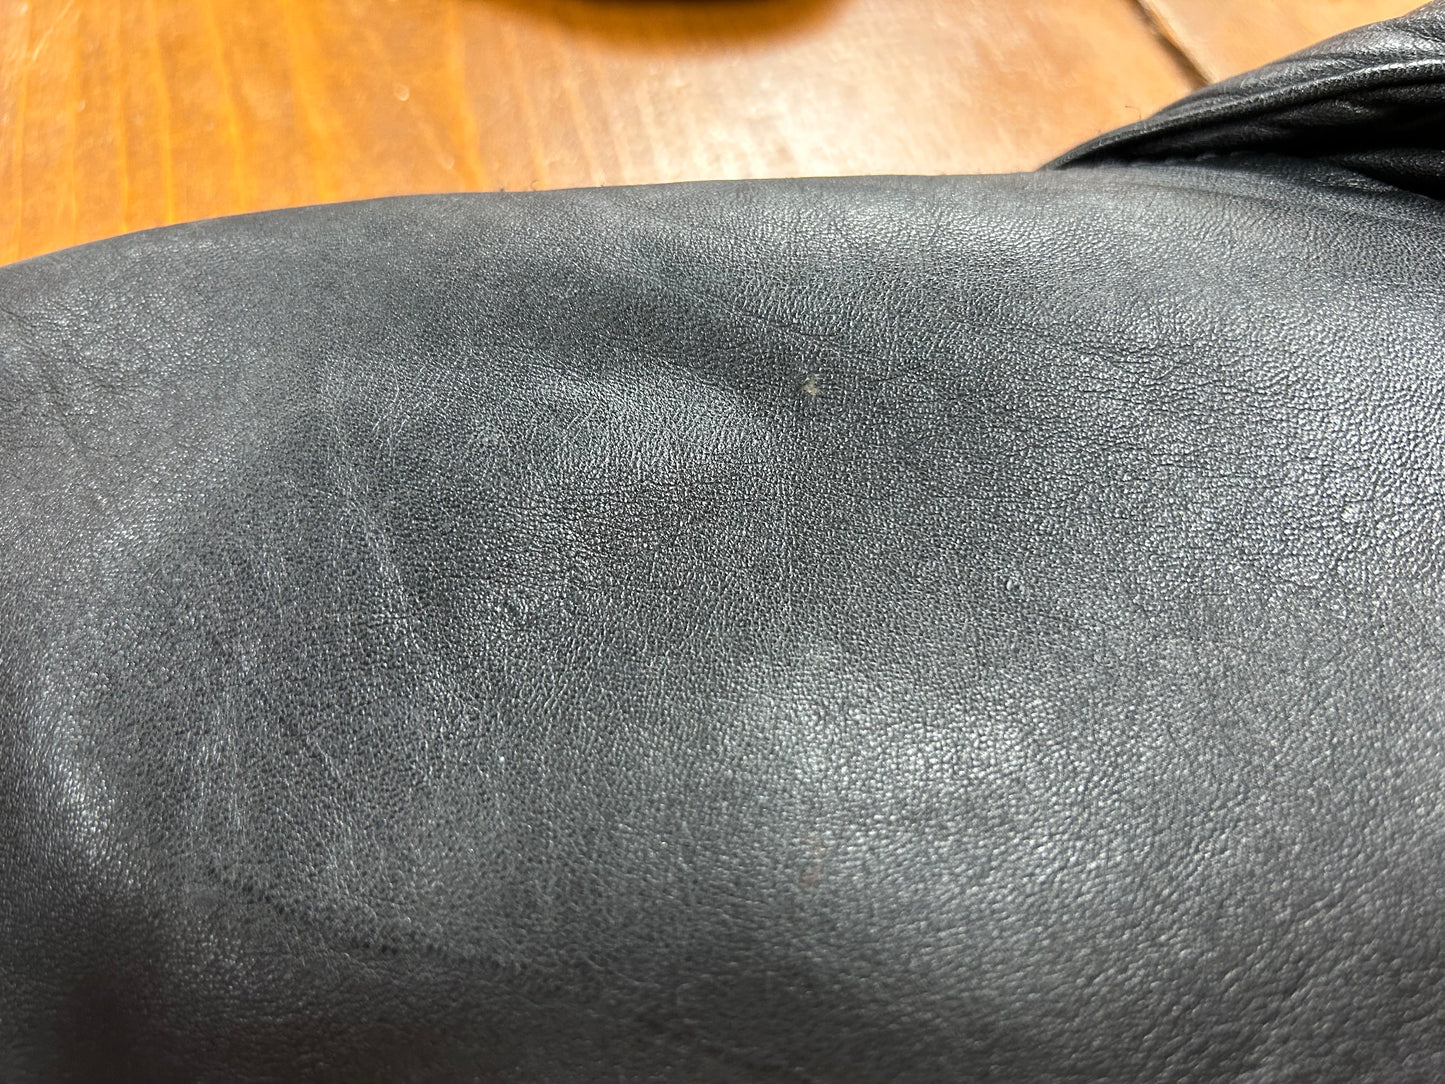 ’80s Vintage Leather Patchwork Jacket [A25981]